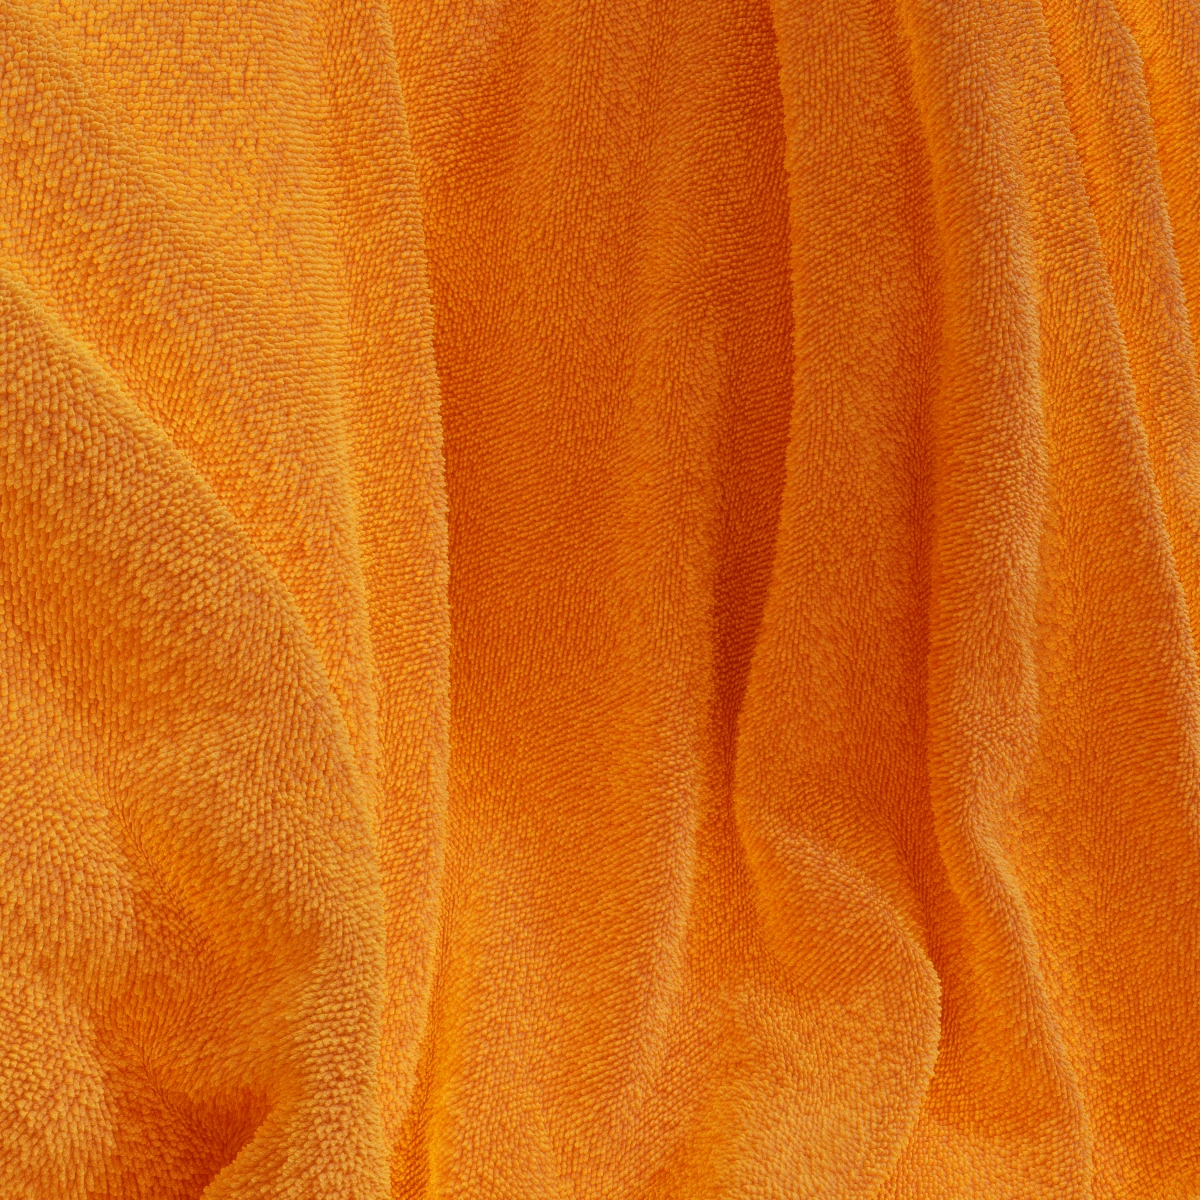 Orange Microfiber Cloth PBR Texture